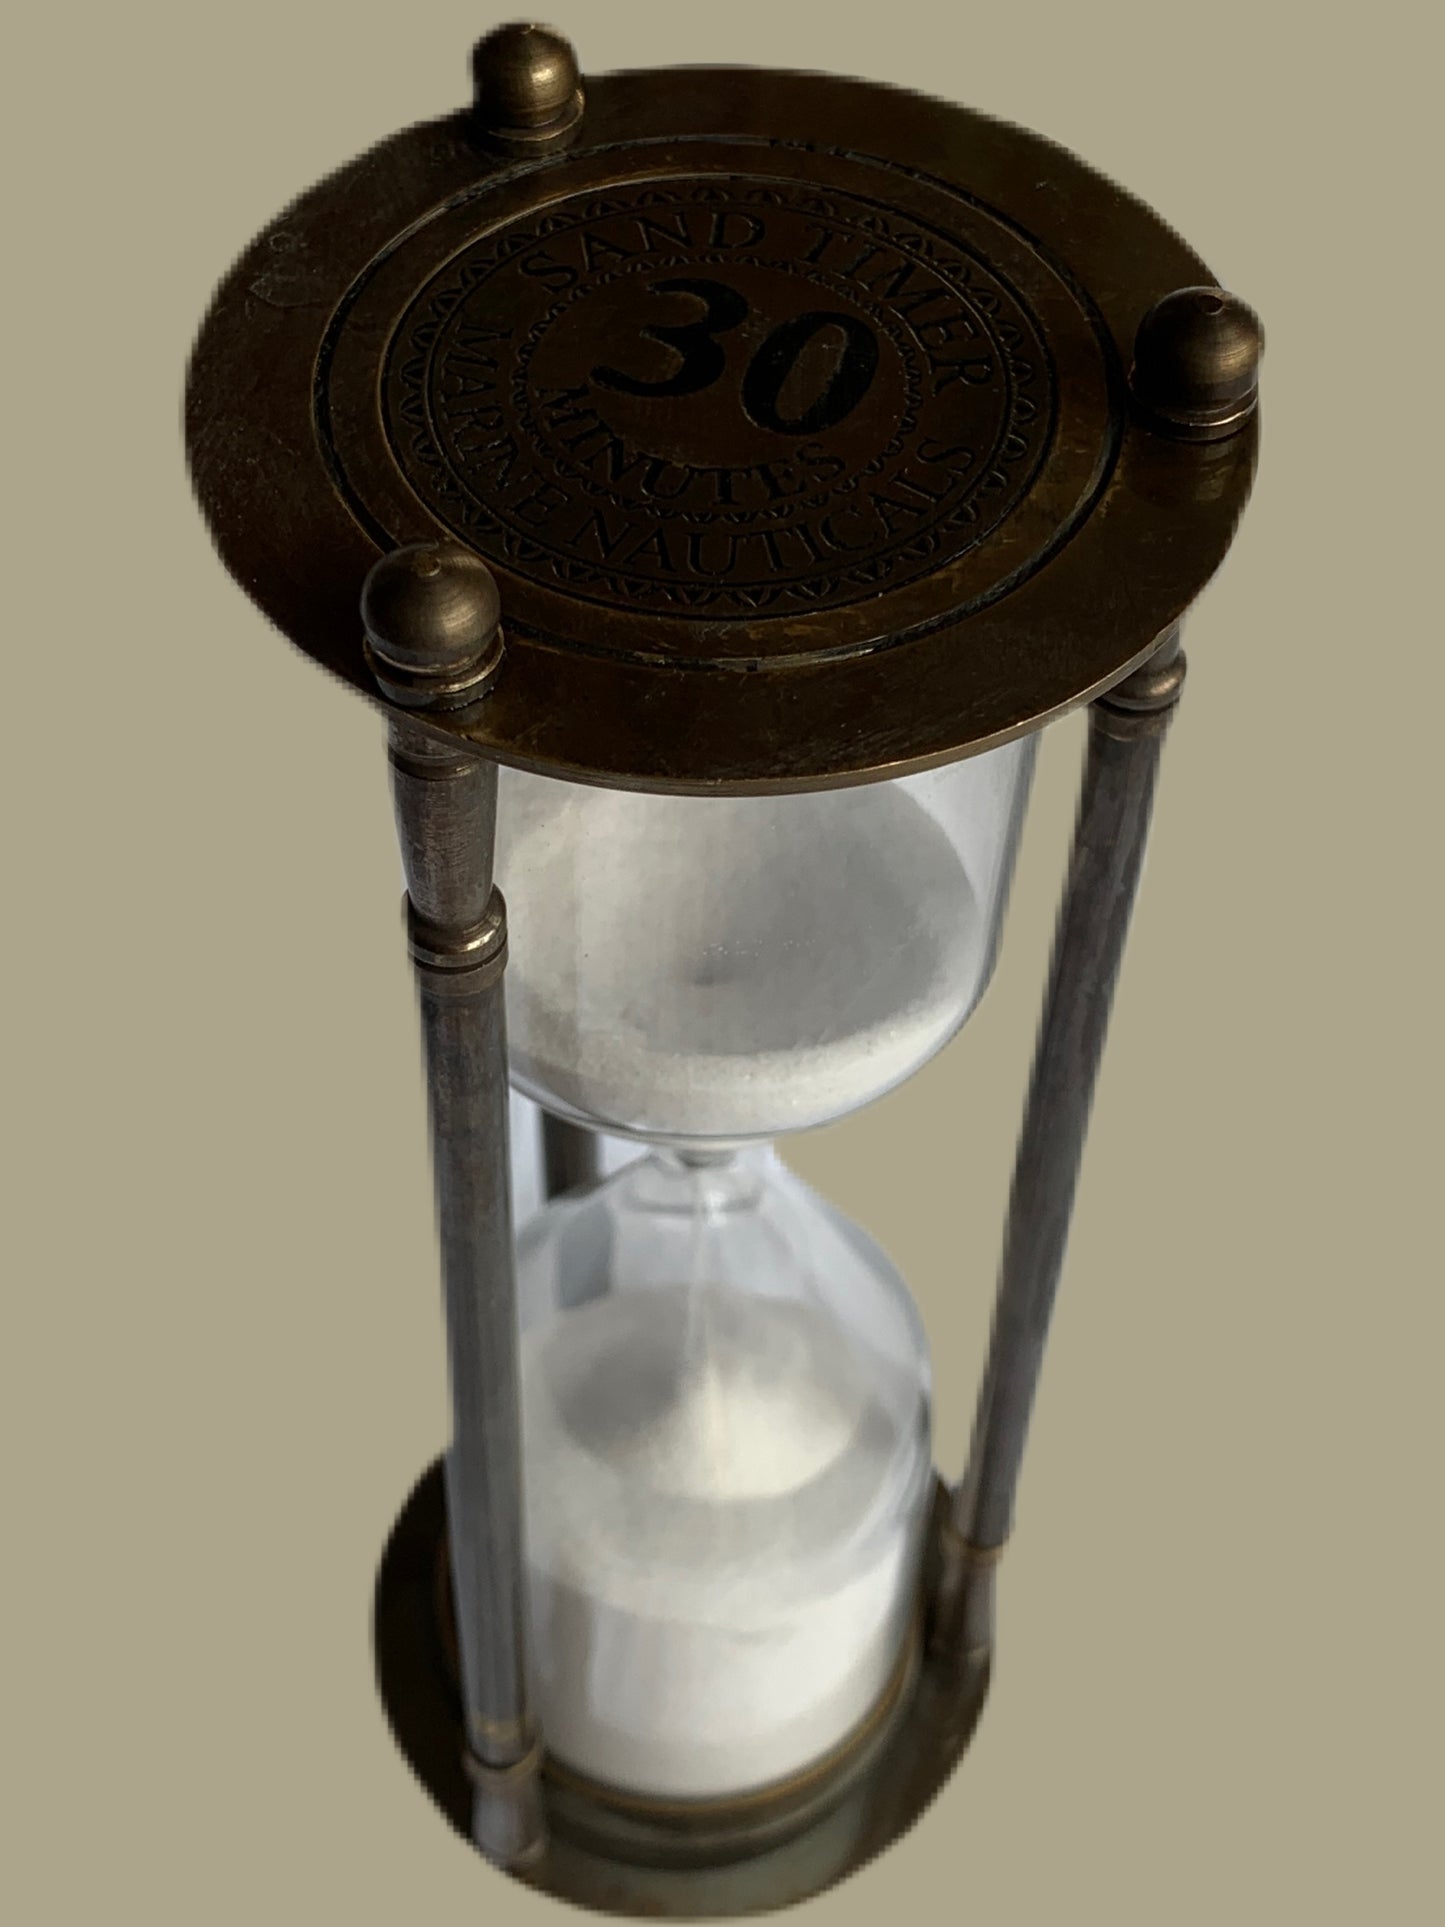 30 minute hourglass